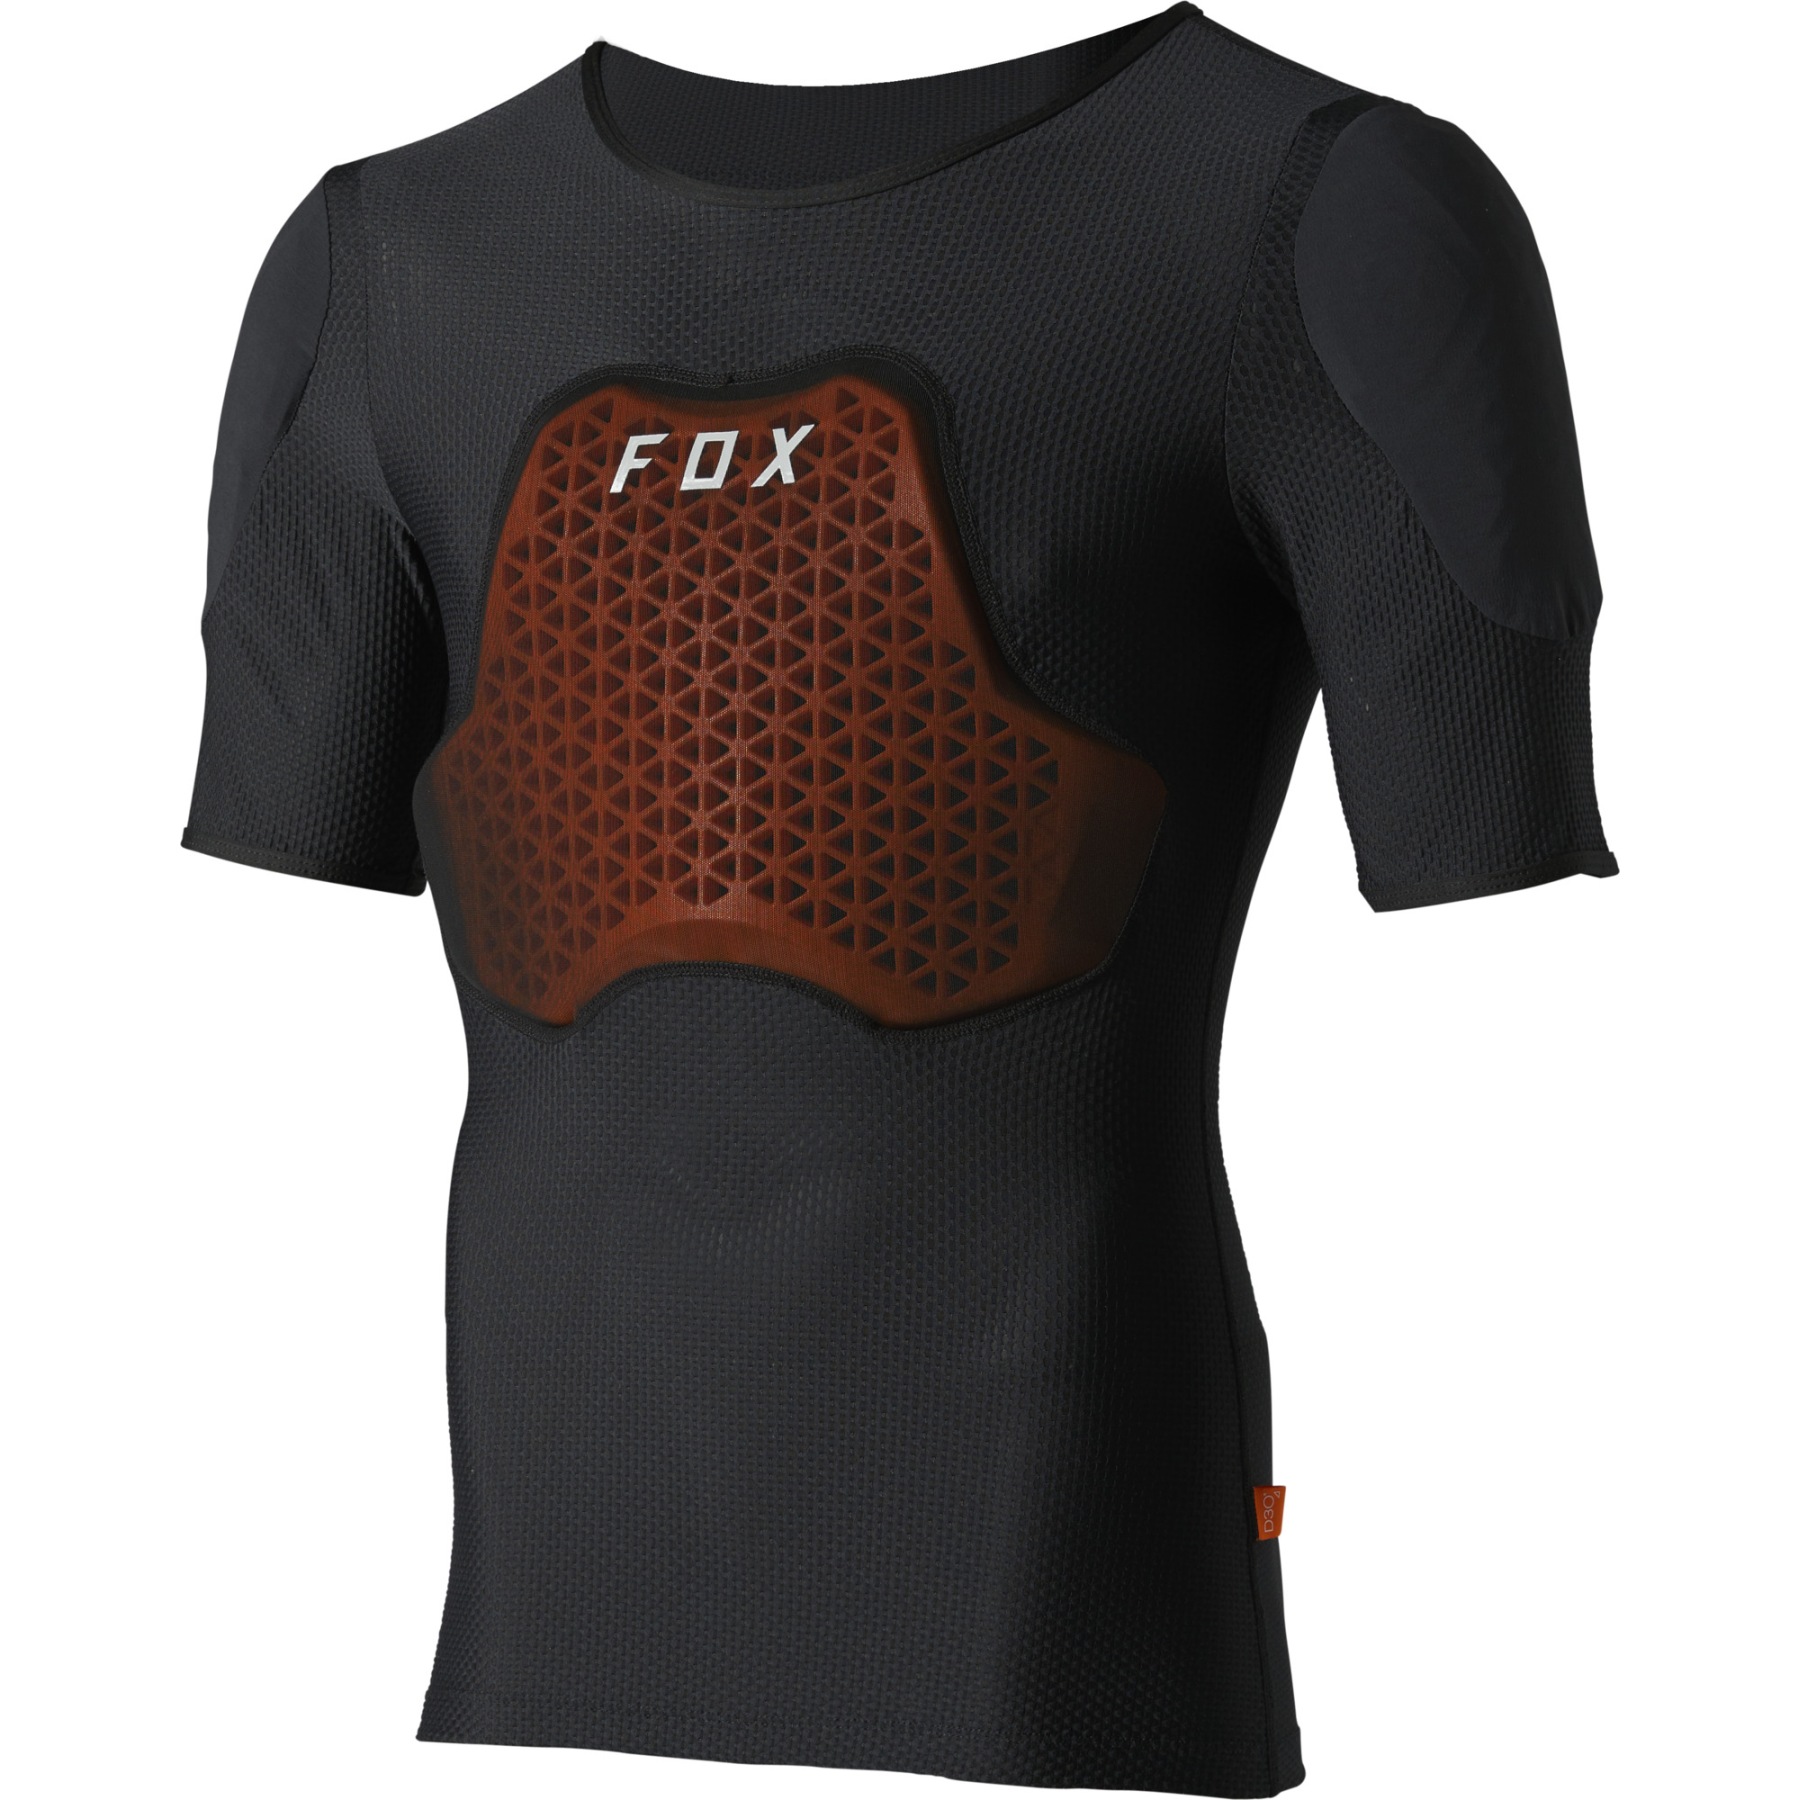 Foto de FOX Camiseta interior Hombre - Baseframe Pro - black